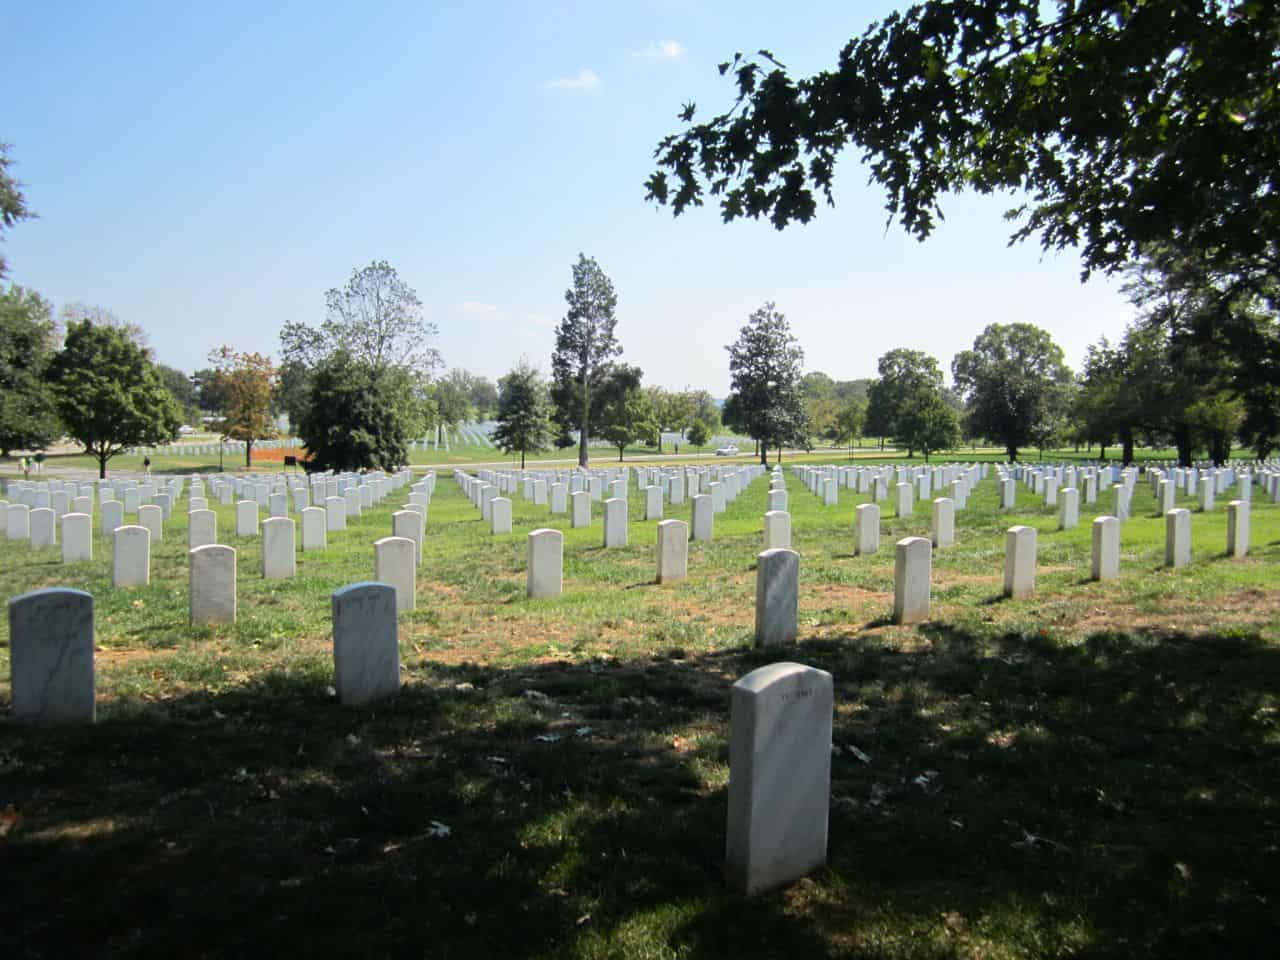 Arlington National Cemetery - Washington D.C., USA